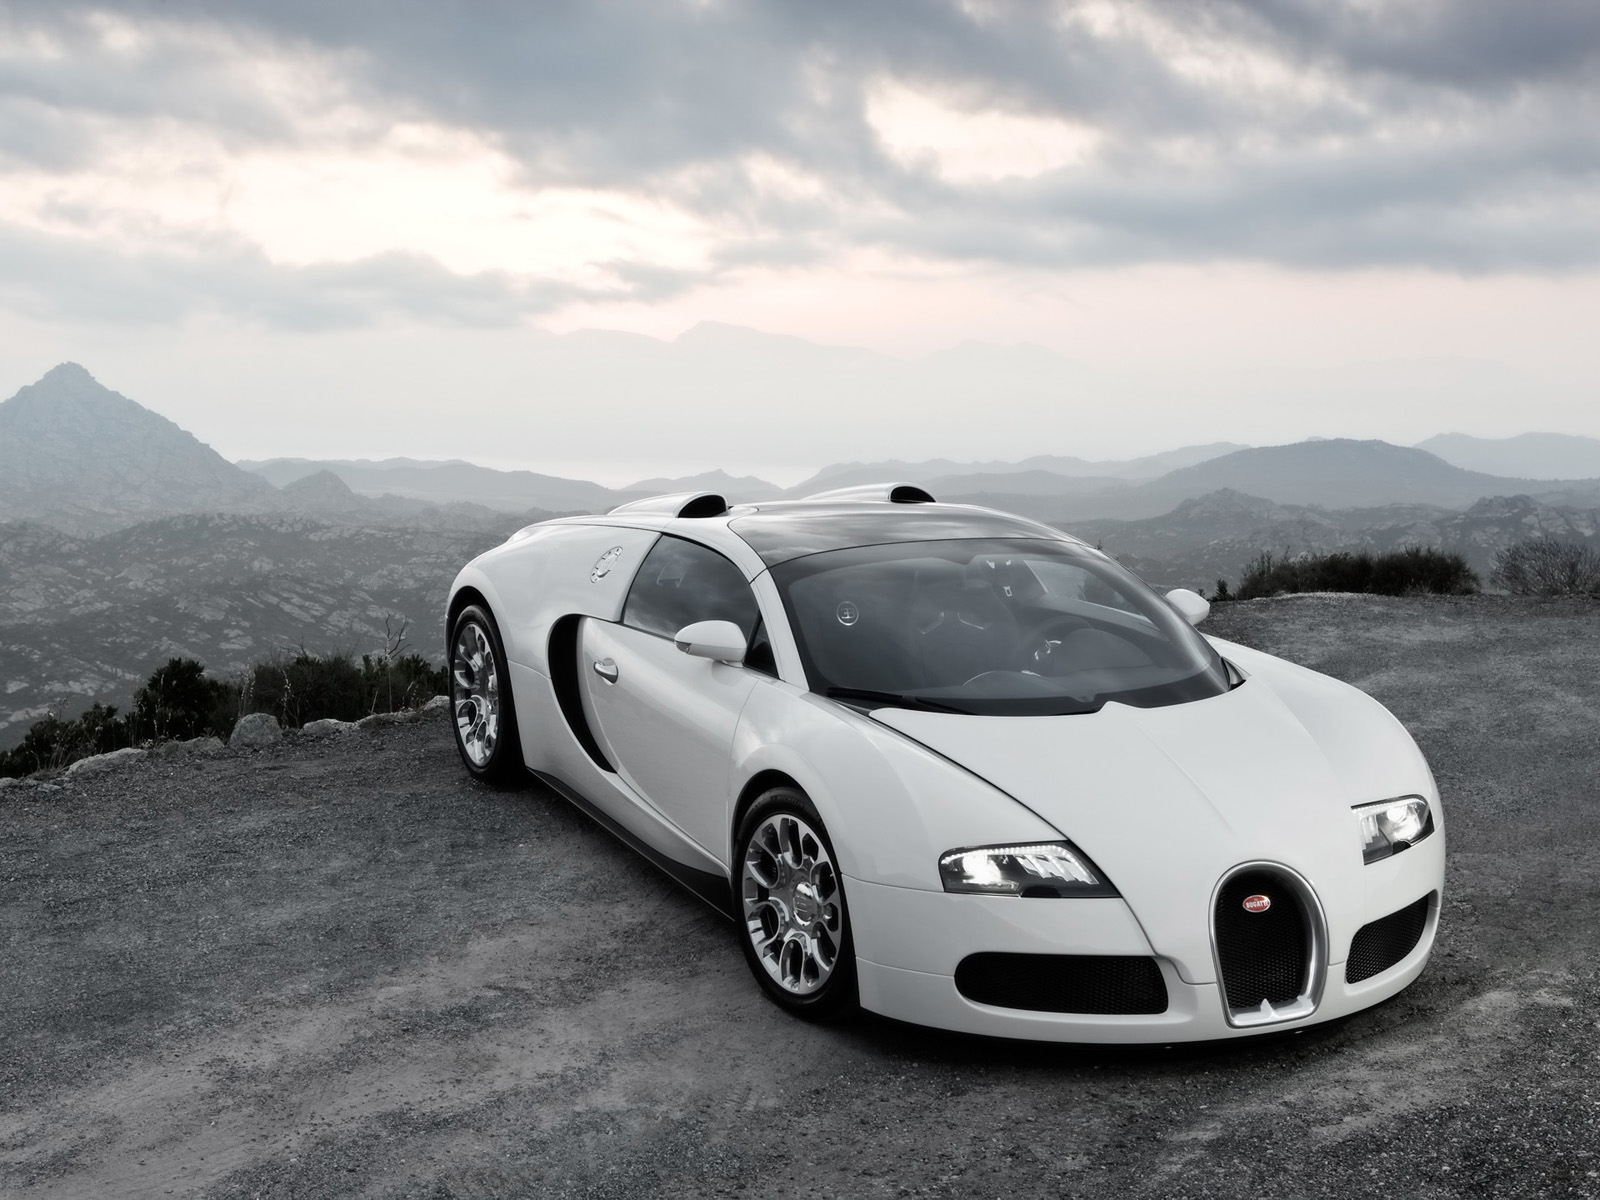 Veyron Grandsport still remaining the most jaw-dropping Bugatti 2009 model #8